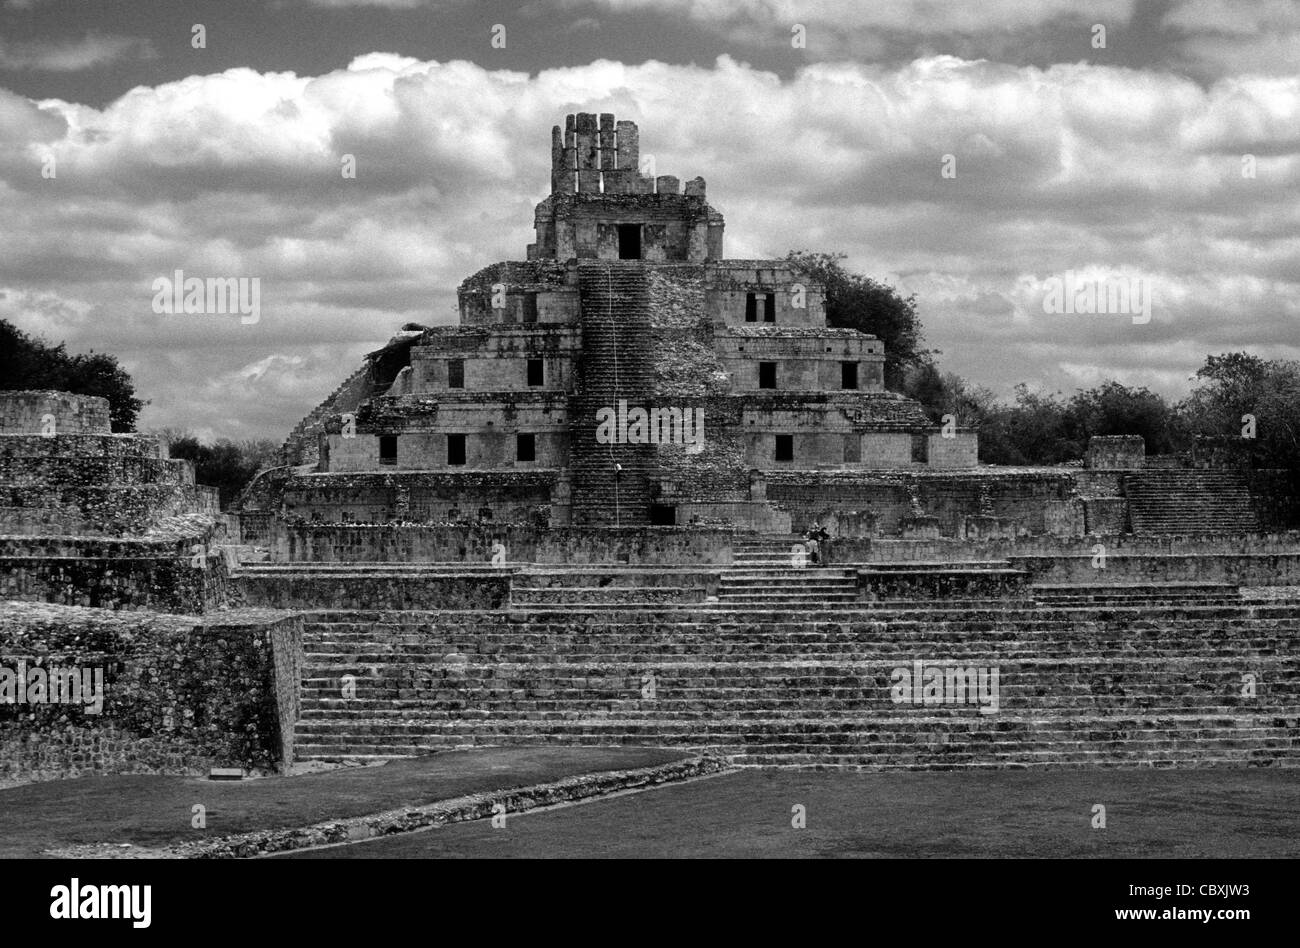 The Edificio de los Cinco Pisos (Building of the Five Storeys) at the Mayan ruins of Edzna, Campeche, Mexico Stock Photo